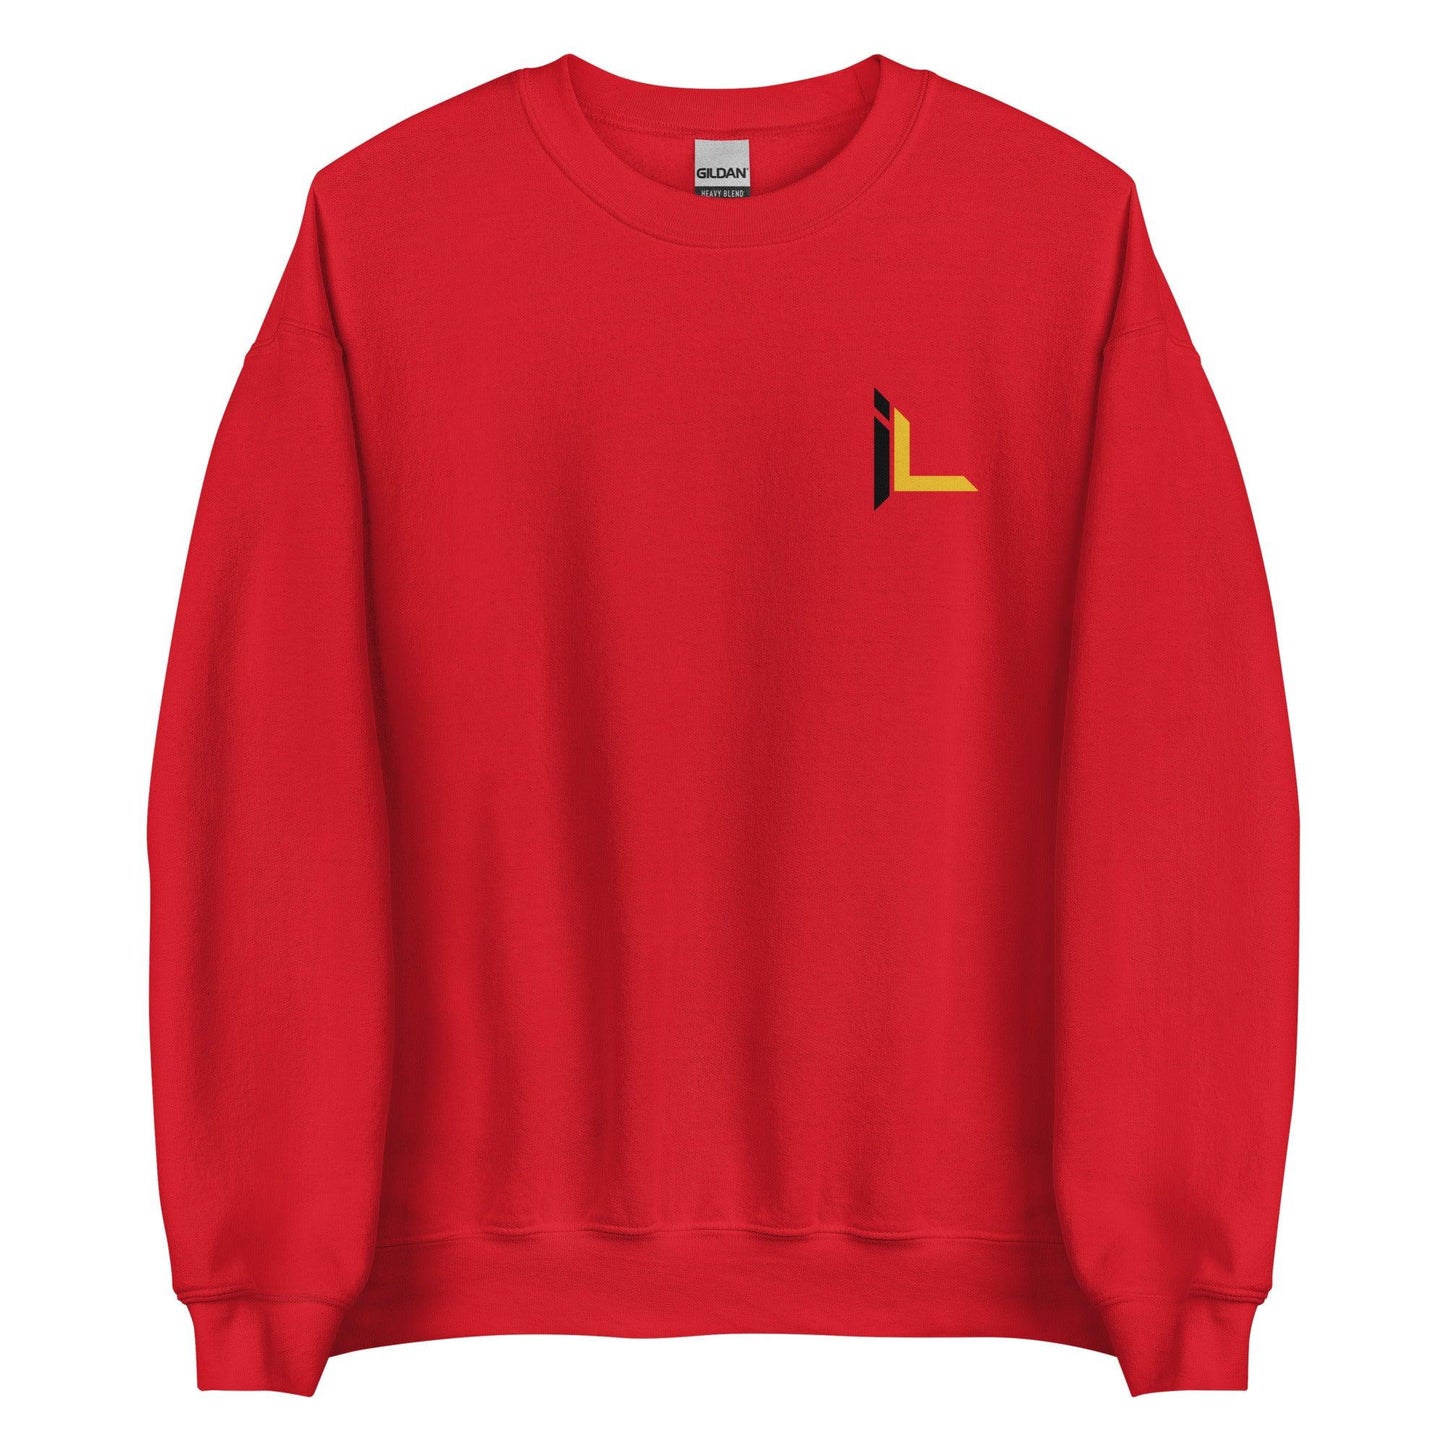 Isaiah Landry "Essential" Sweatshirt - Fan Arch